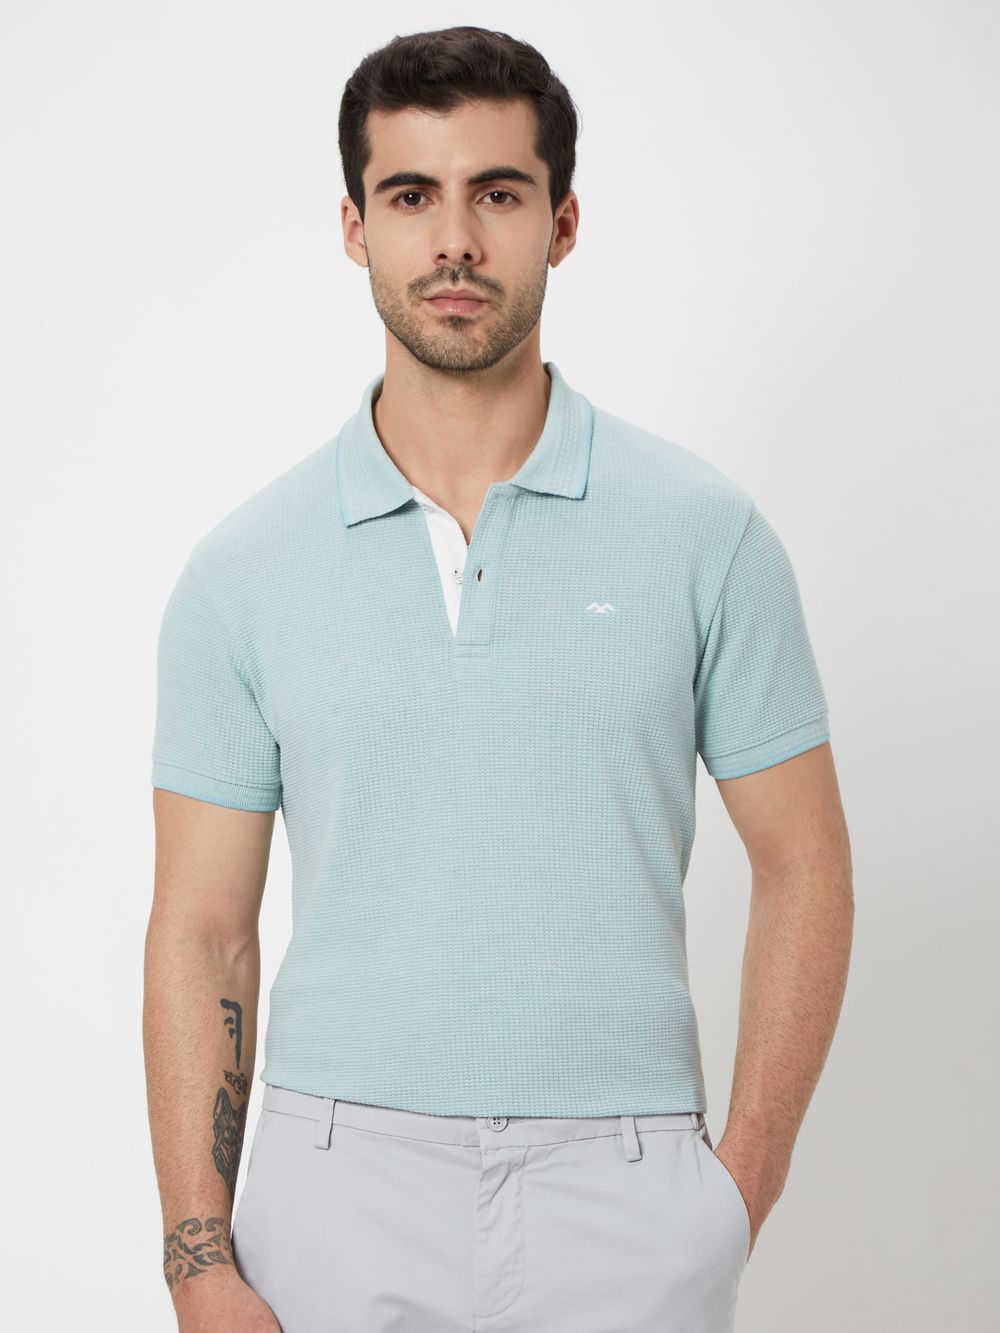 Light Blue & White Jacquard Textured Jersey Polo T-Shirt